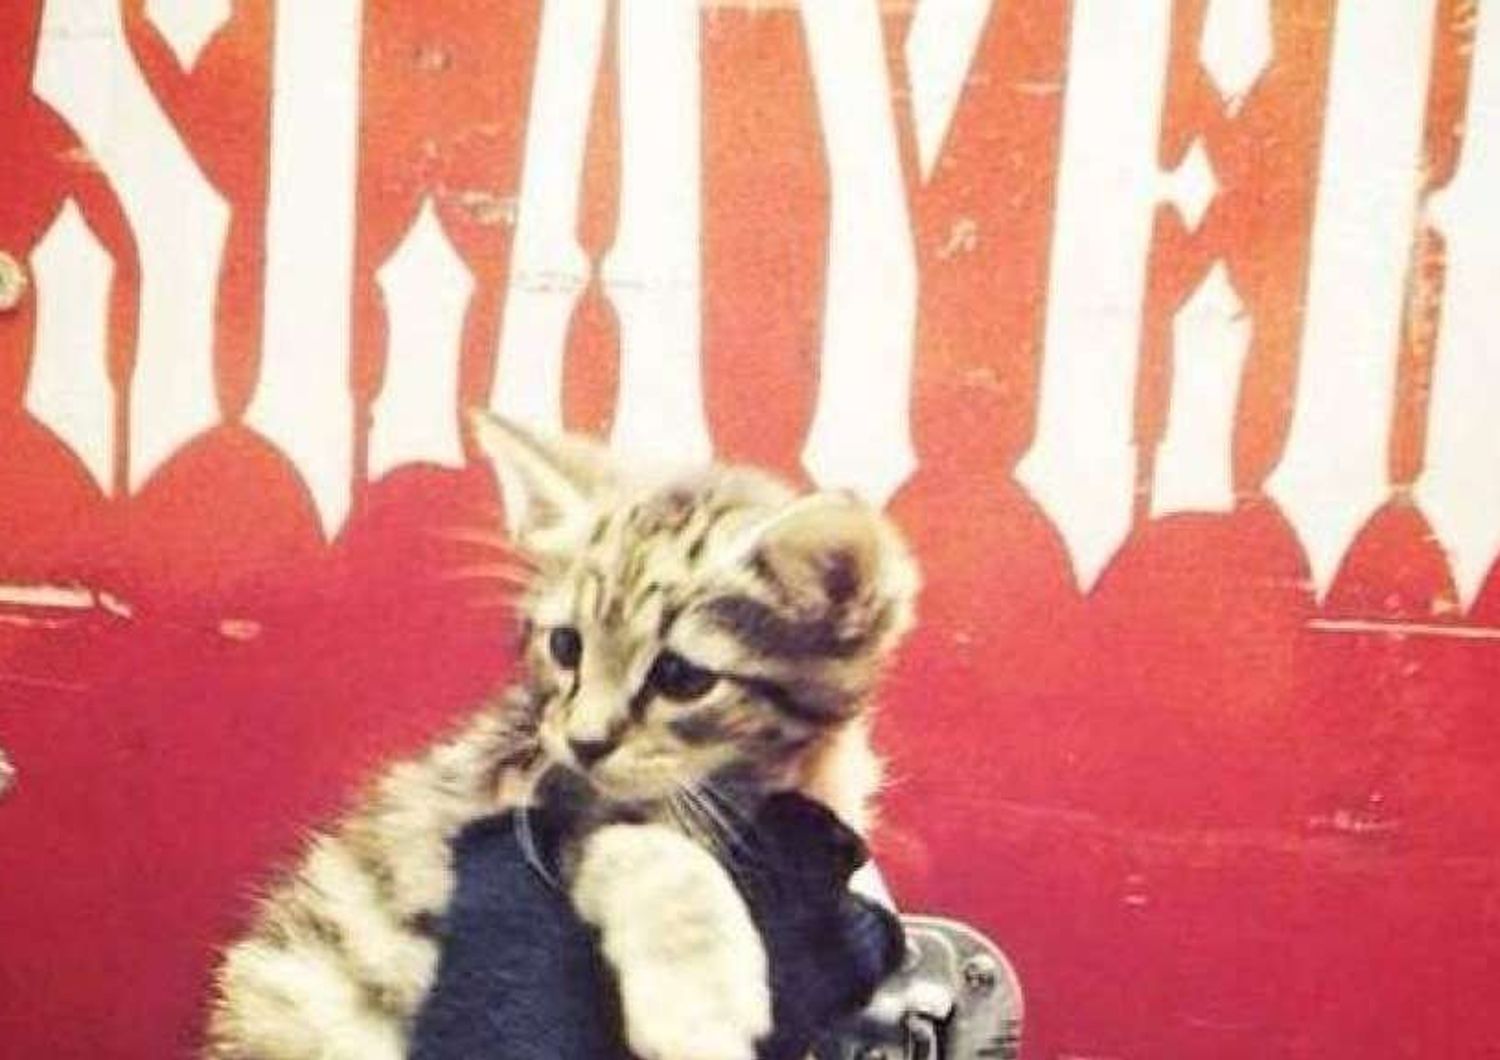 Il rude gruppo metal Slayer salva una gattina